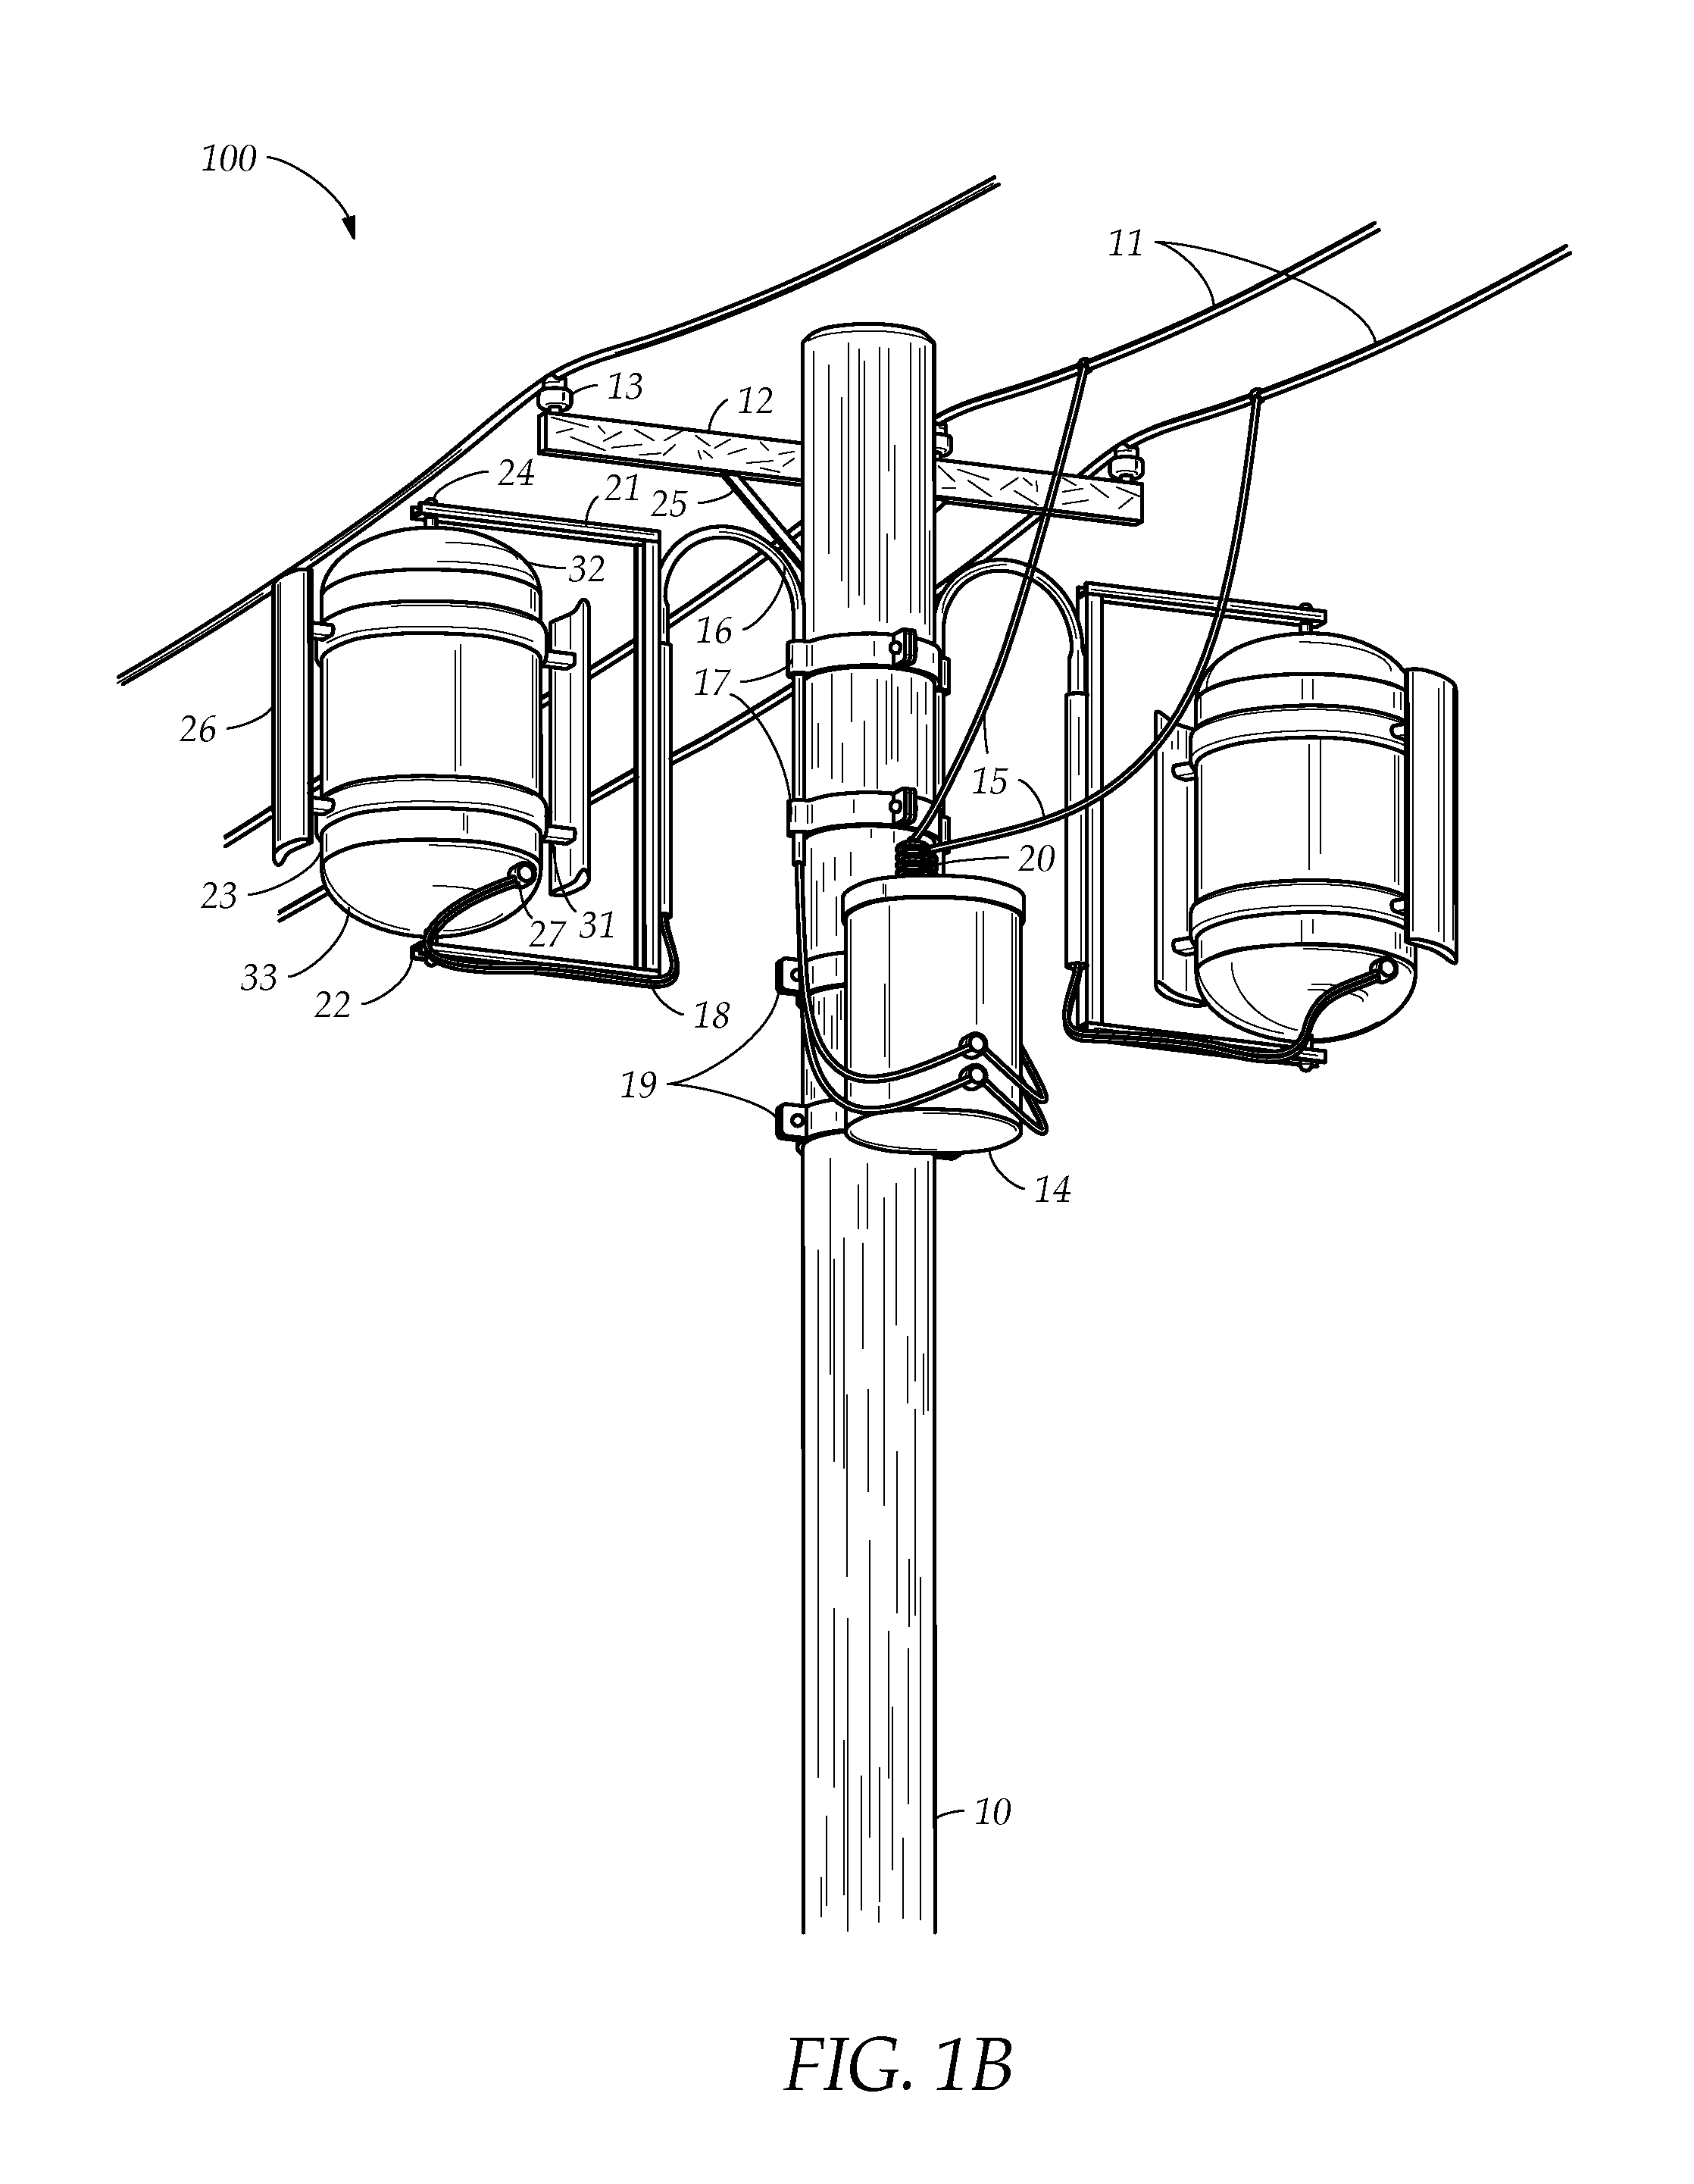 Utility pole mountable vertical axis wind turbine